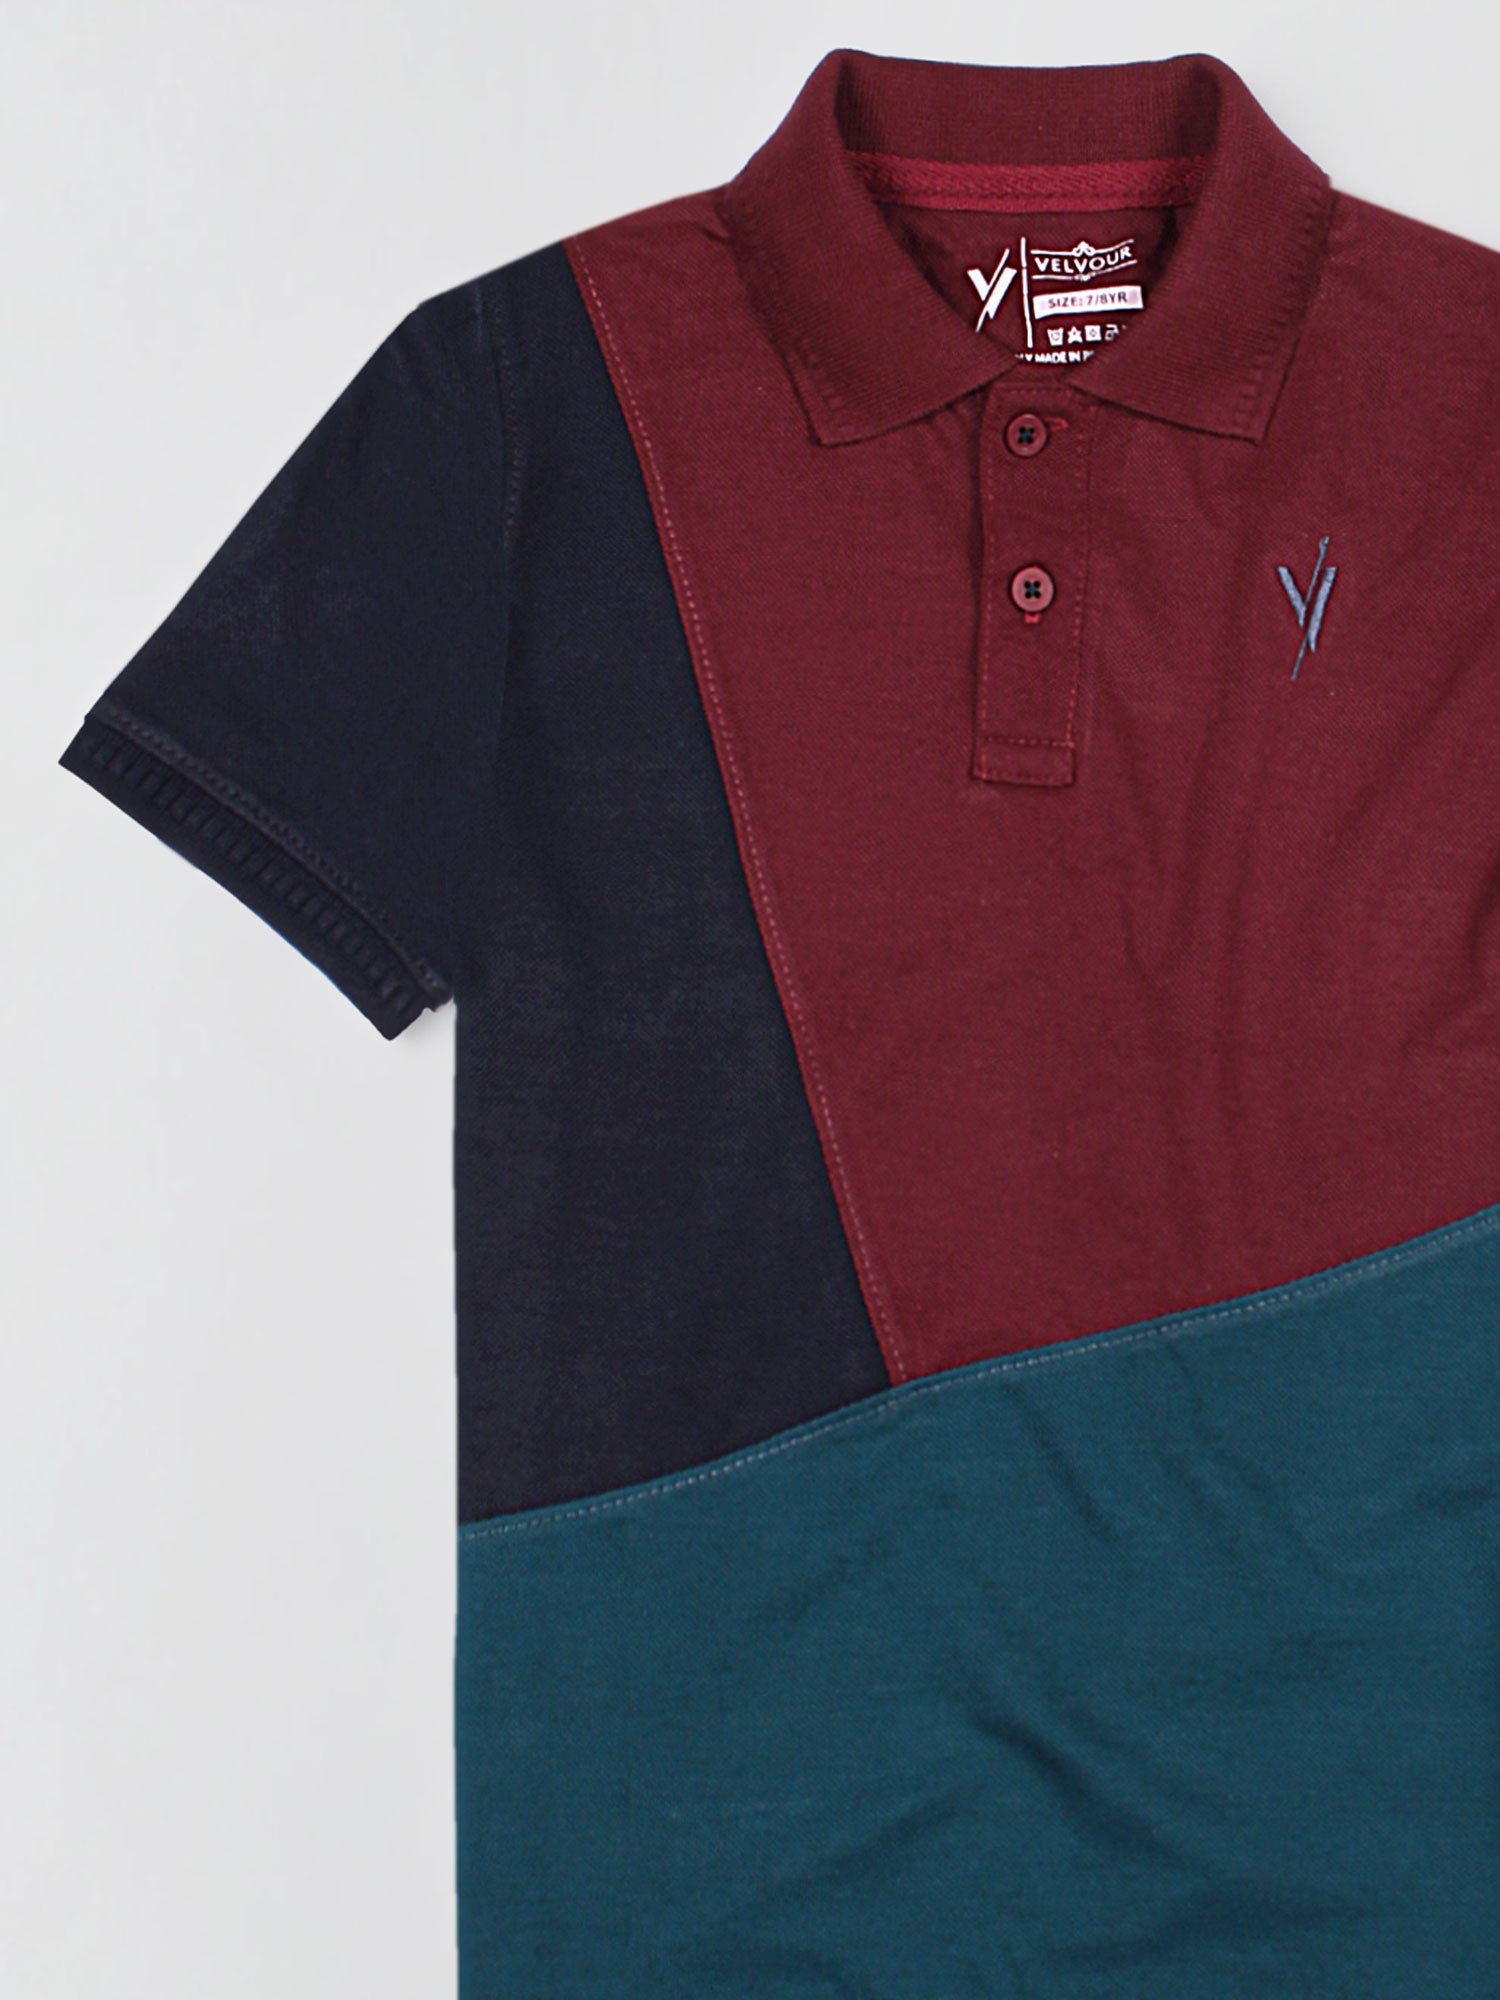 Boys Polo Shirt (Short Sleeve) By Velvour Art# VBP03-Panel-A - Velvour Shop